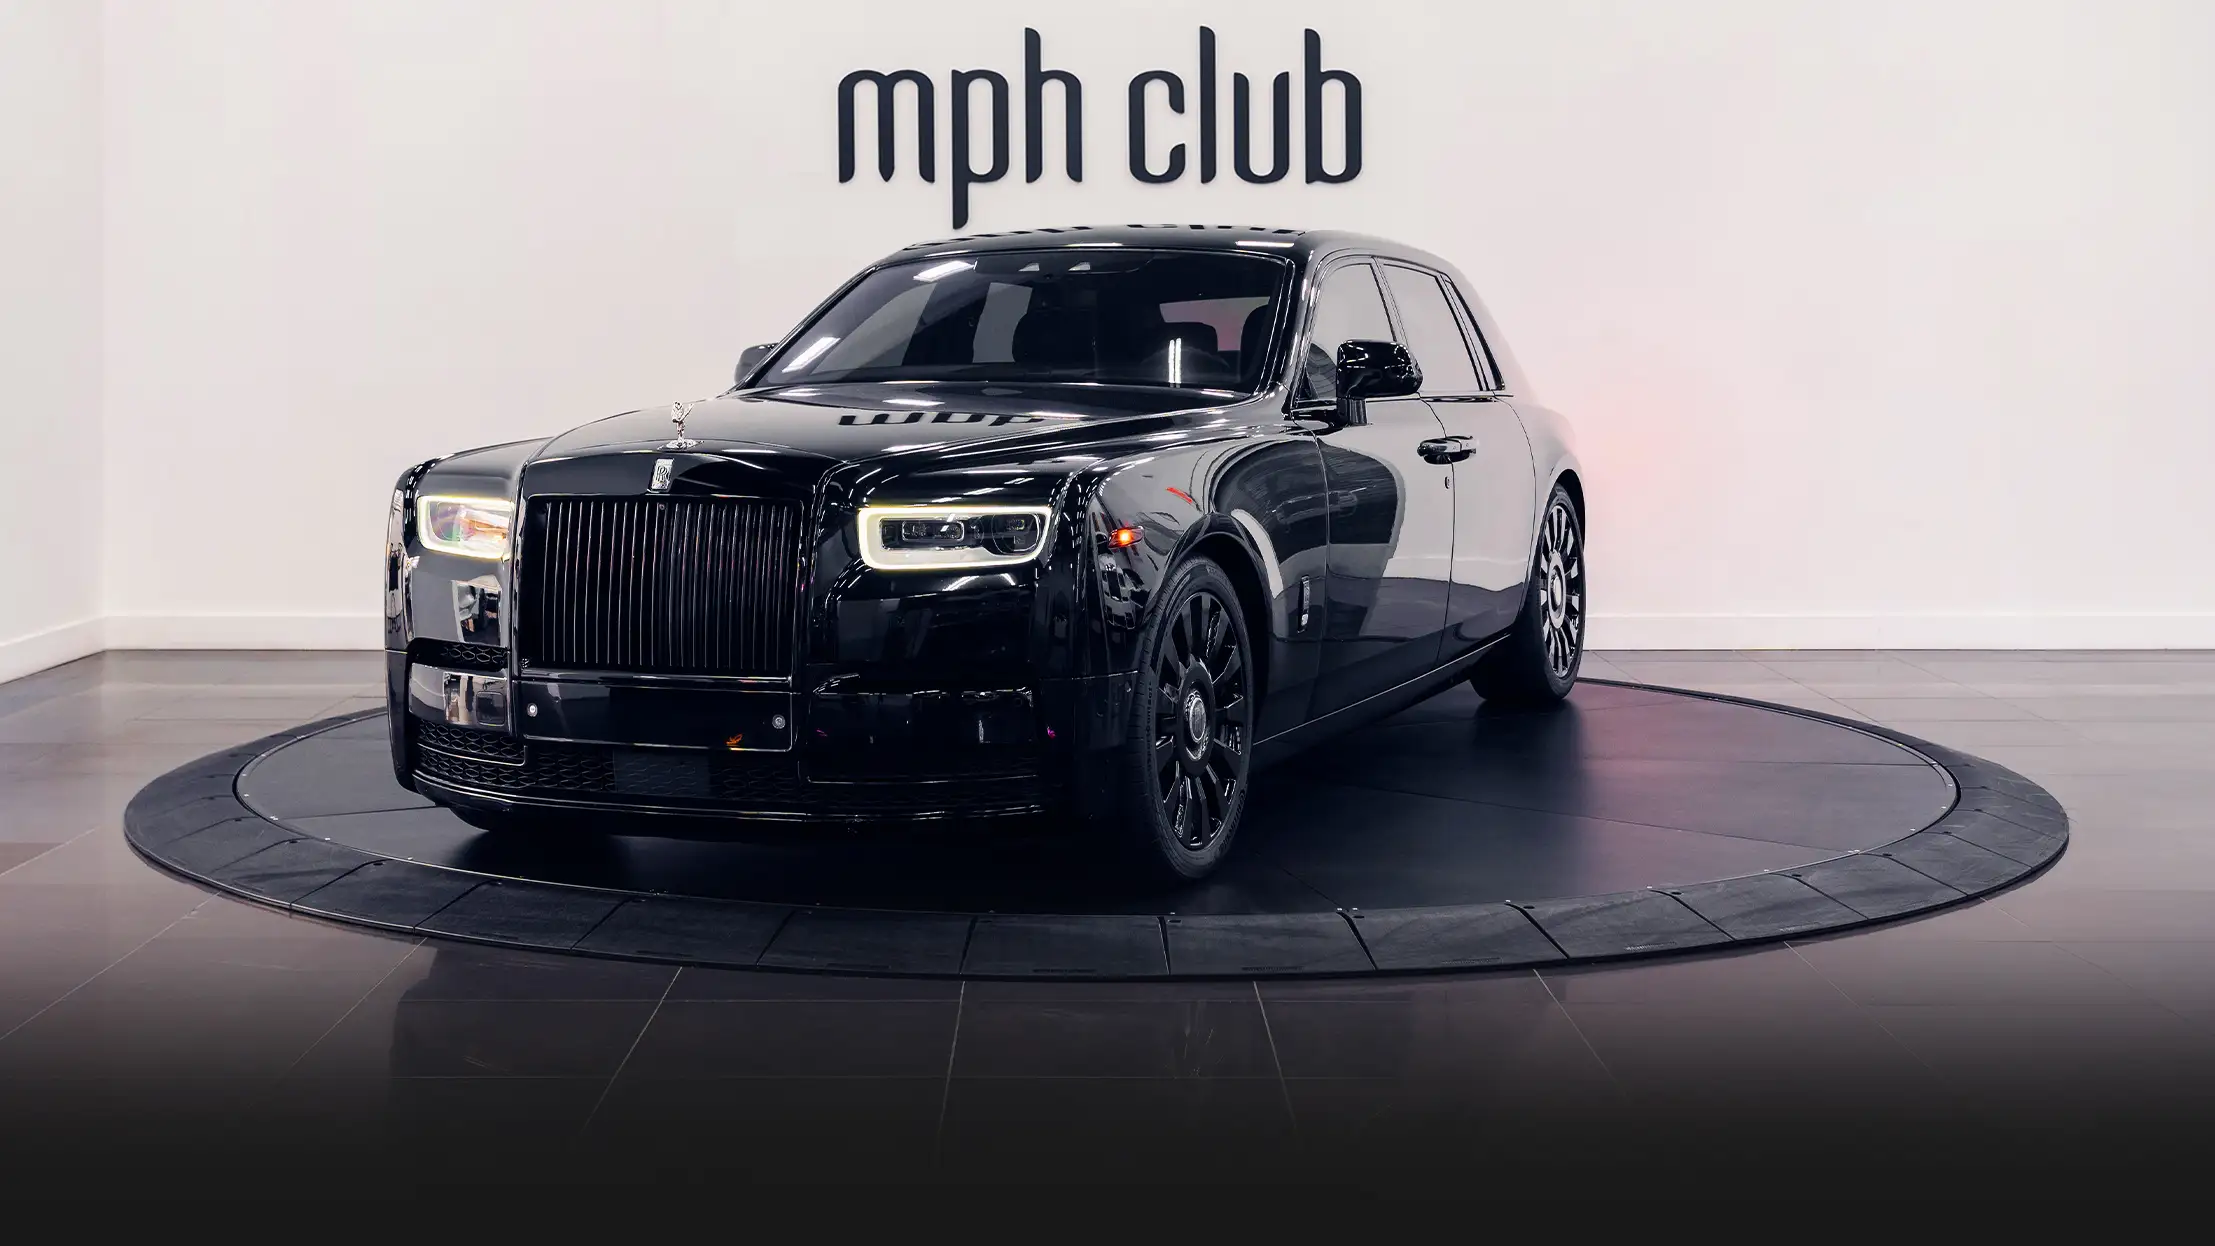 Black on black Rolls Royce Phantom rental profile view - mph club